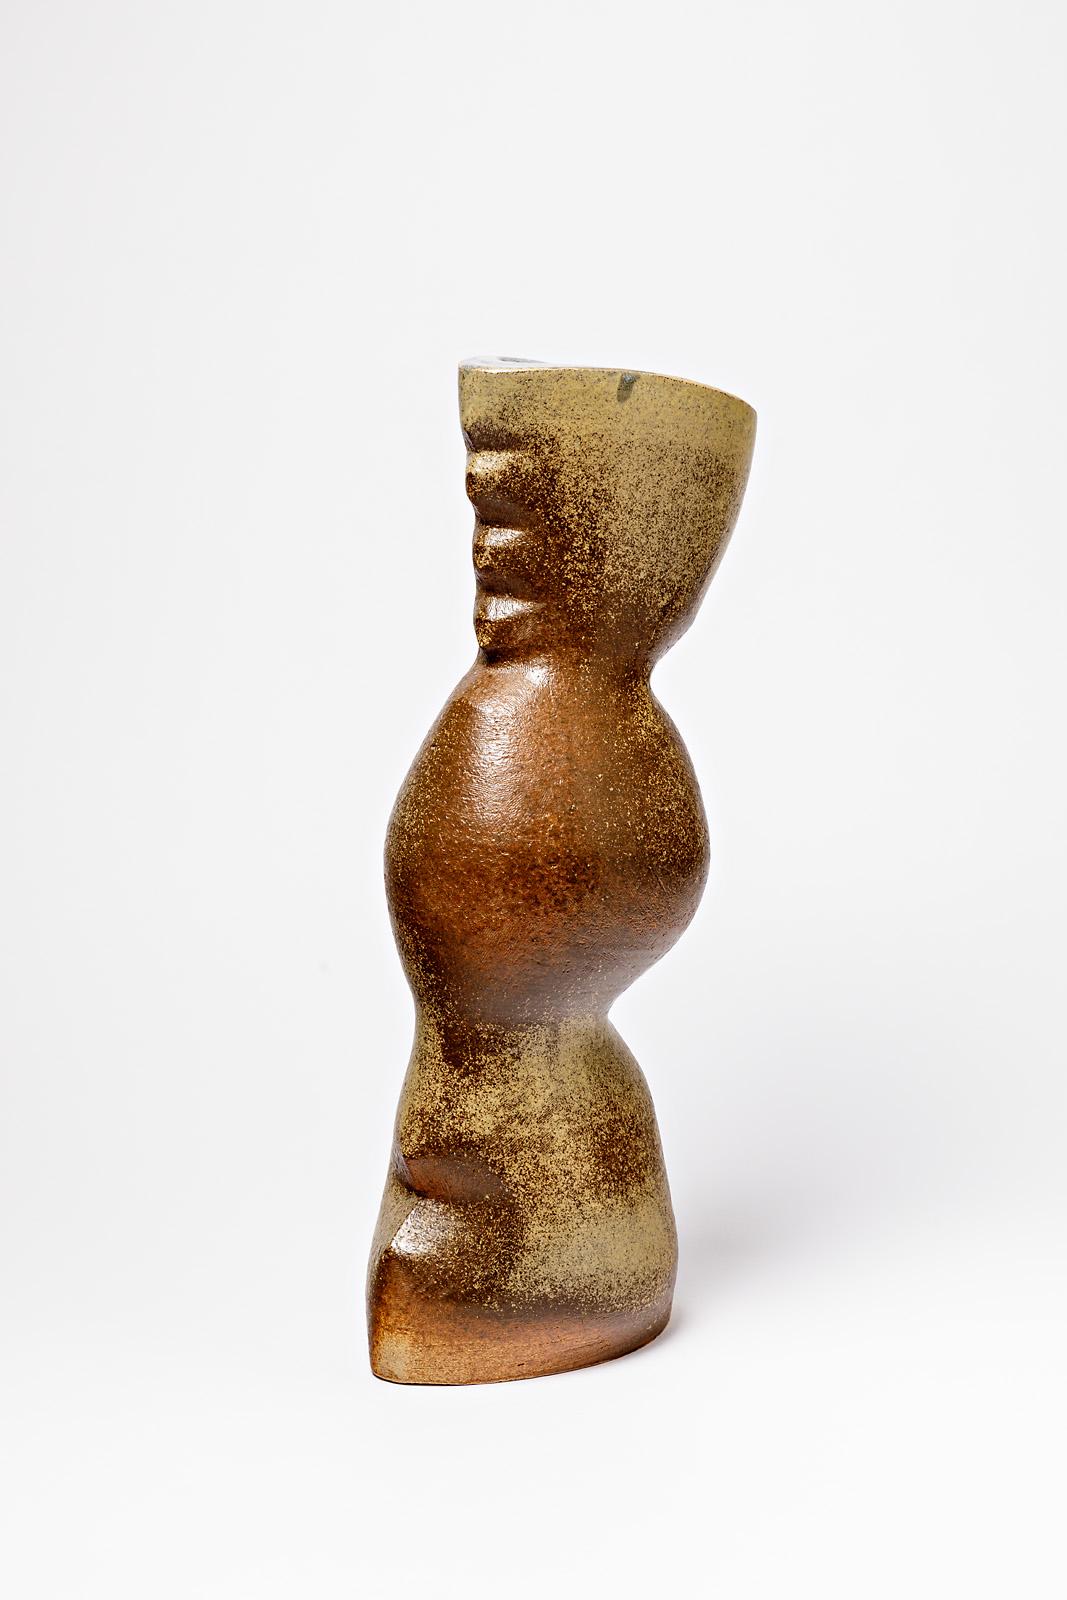 Beaux Arts Ceramic Sculptural Vase Attributed to Martin Hammond to La Borne, circa 1970